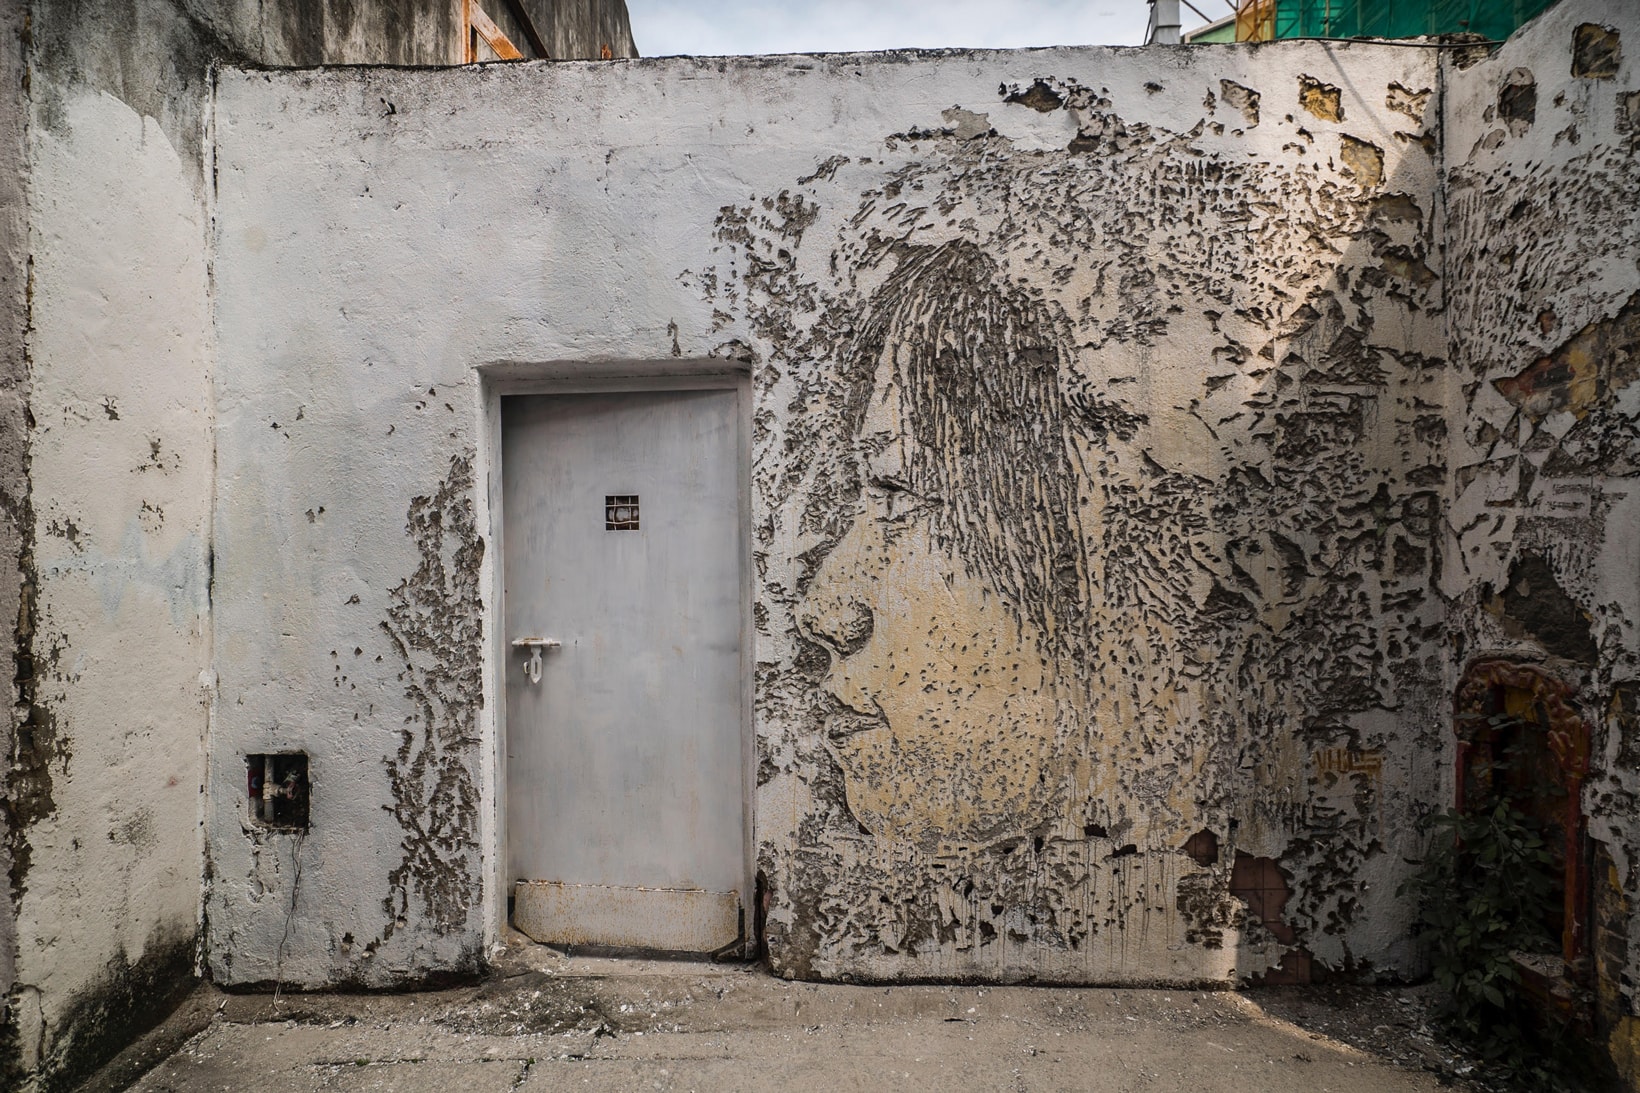 Vhils Debris Exhibition Macau Navy Yard No.1 Contemporary Art Center Exhibit Artwork Mural Portraits